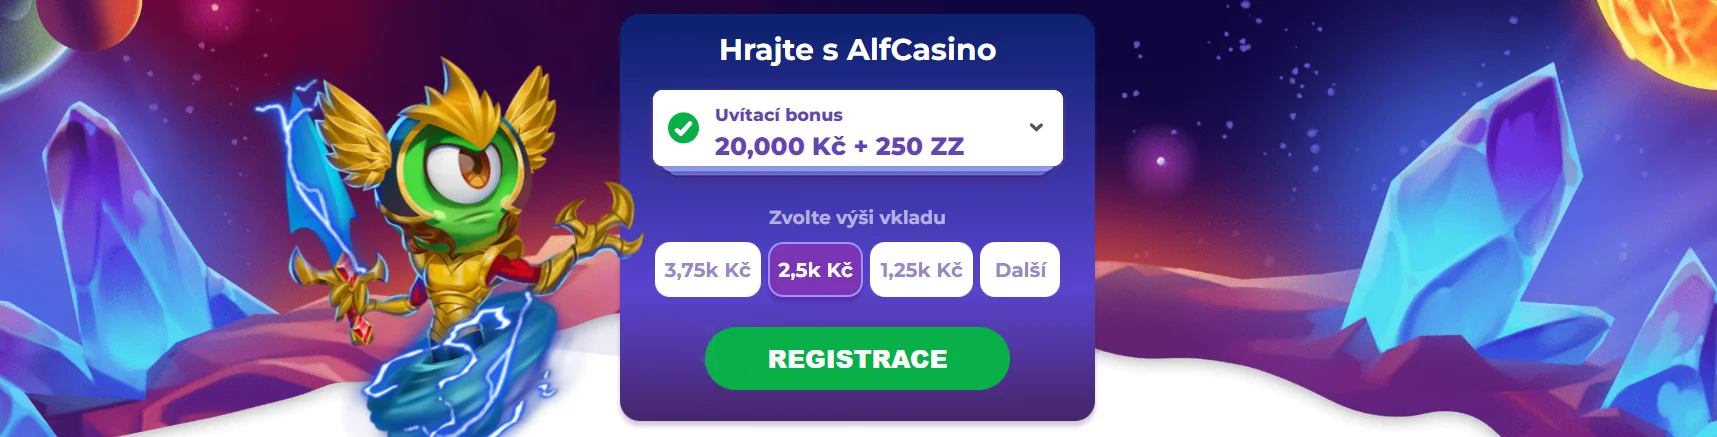 Alf casino promocode